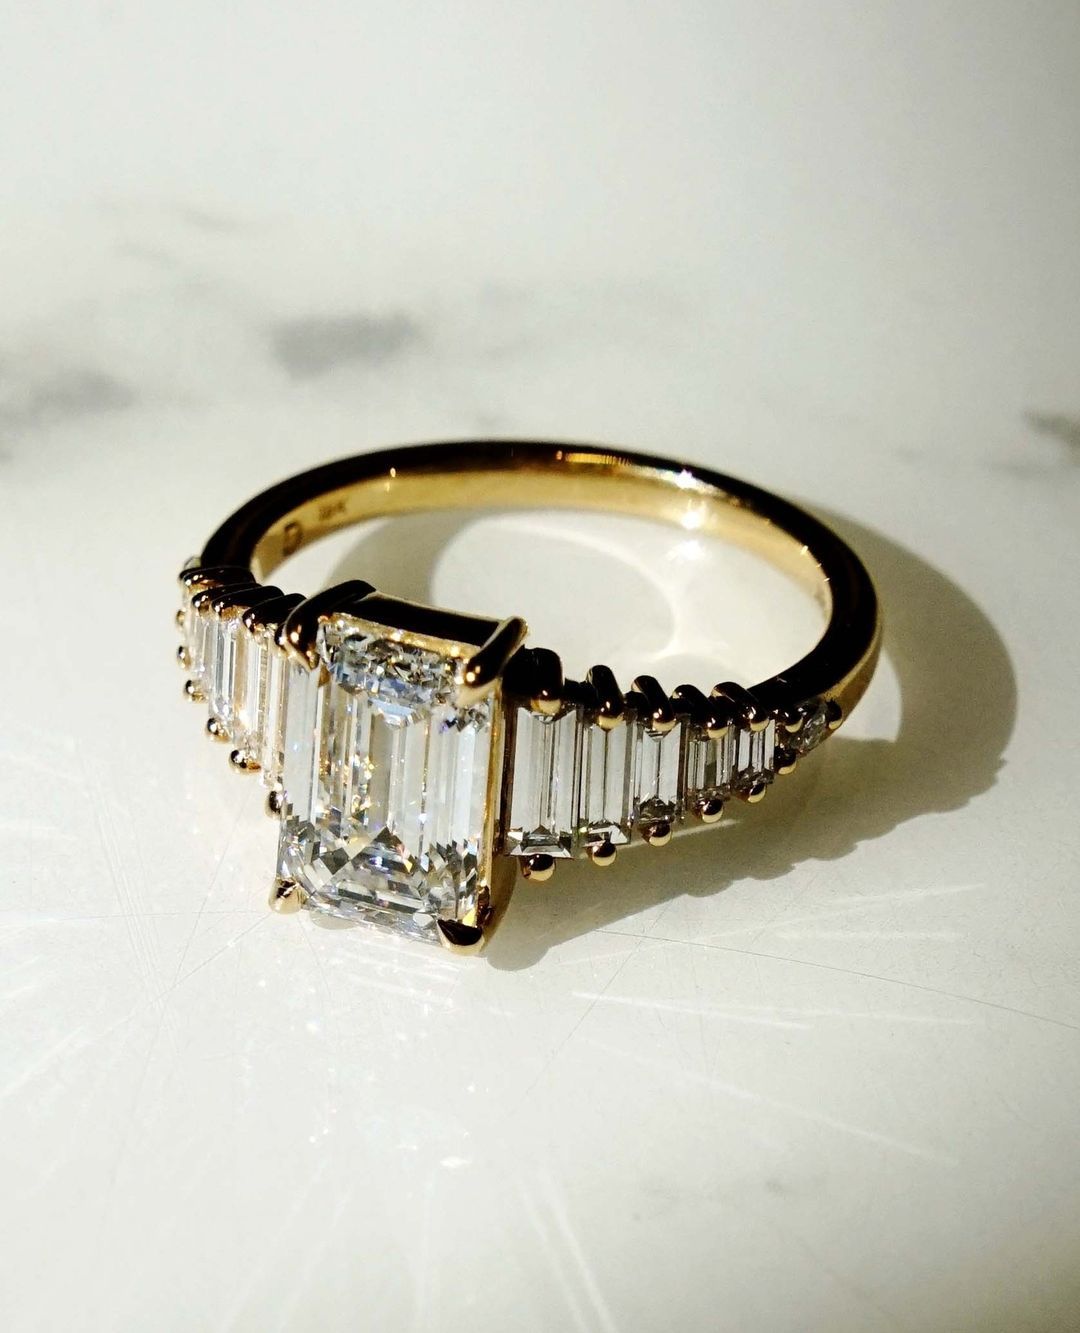 Get elegant and stylish custom rings